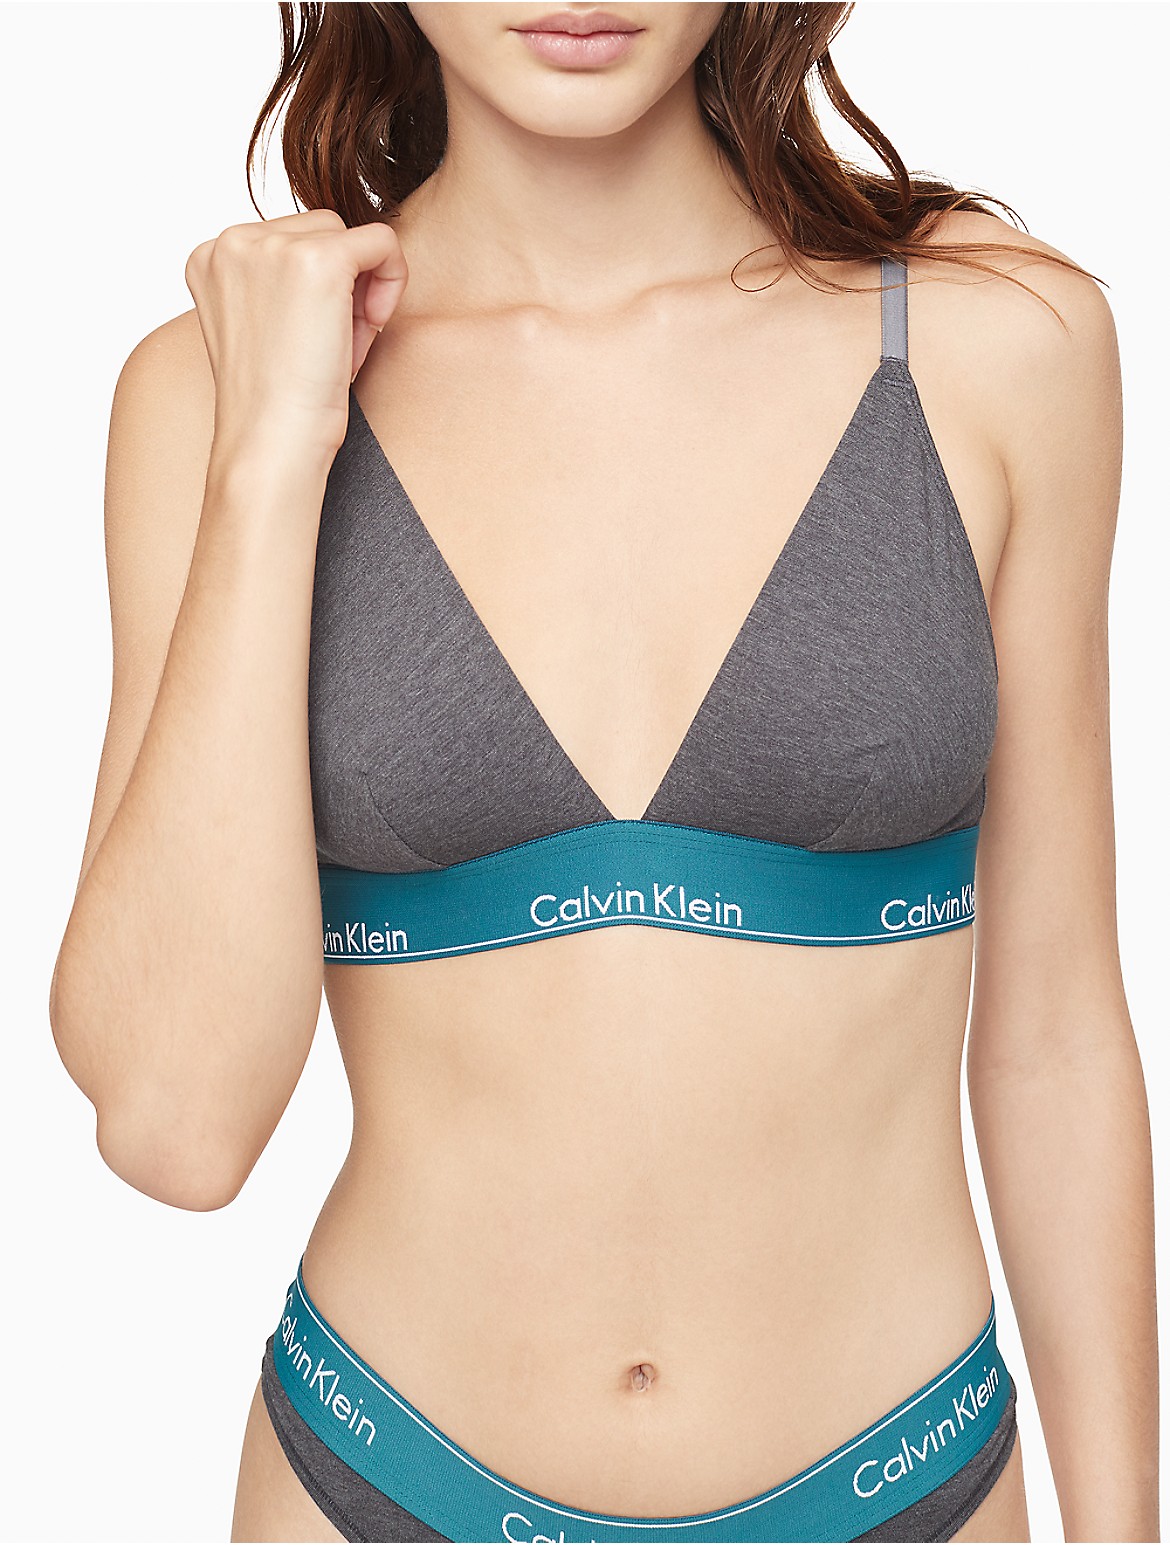 Calvin Klein Women's Modern Cotton Unlined Triangle Bralette - Grey - S